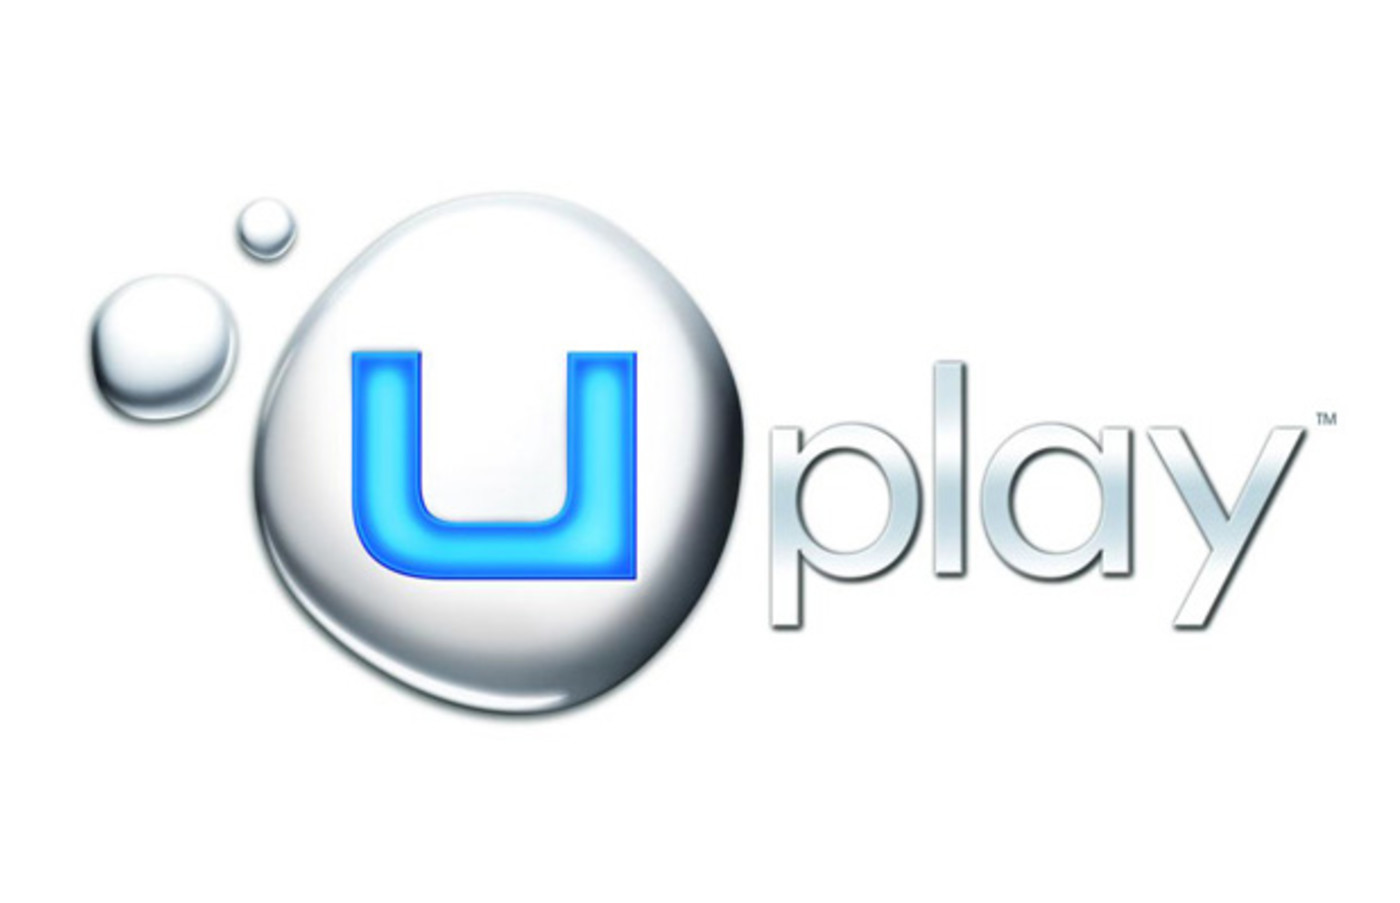 ubisoft uplay download